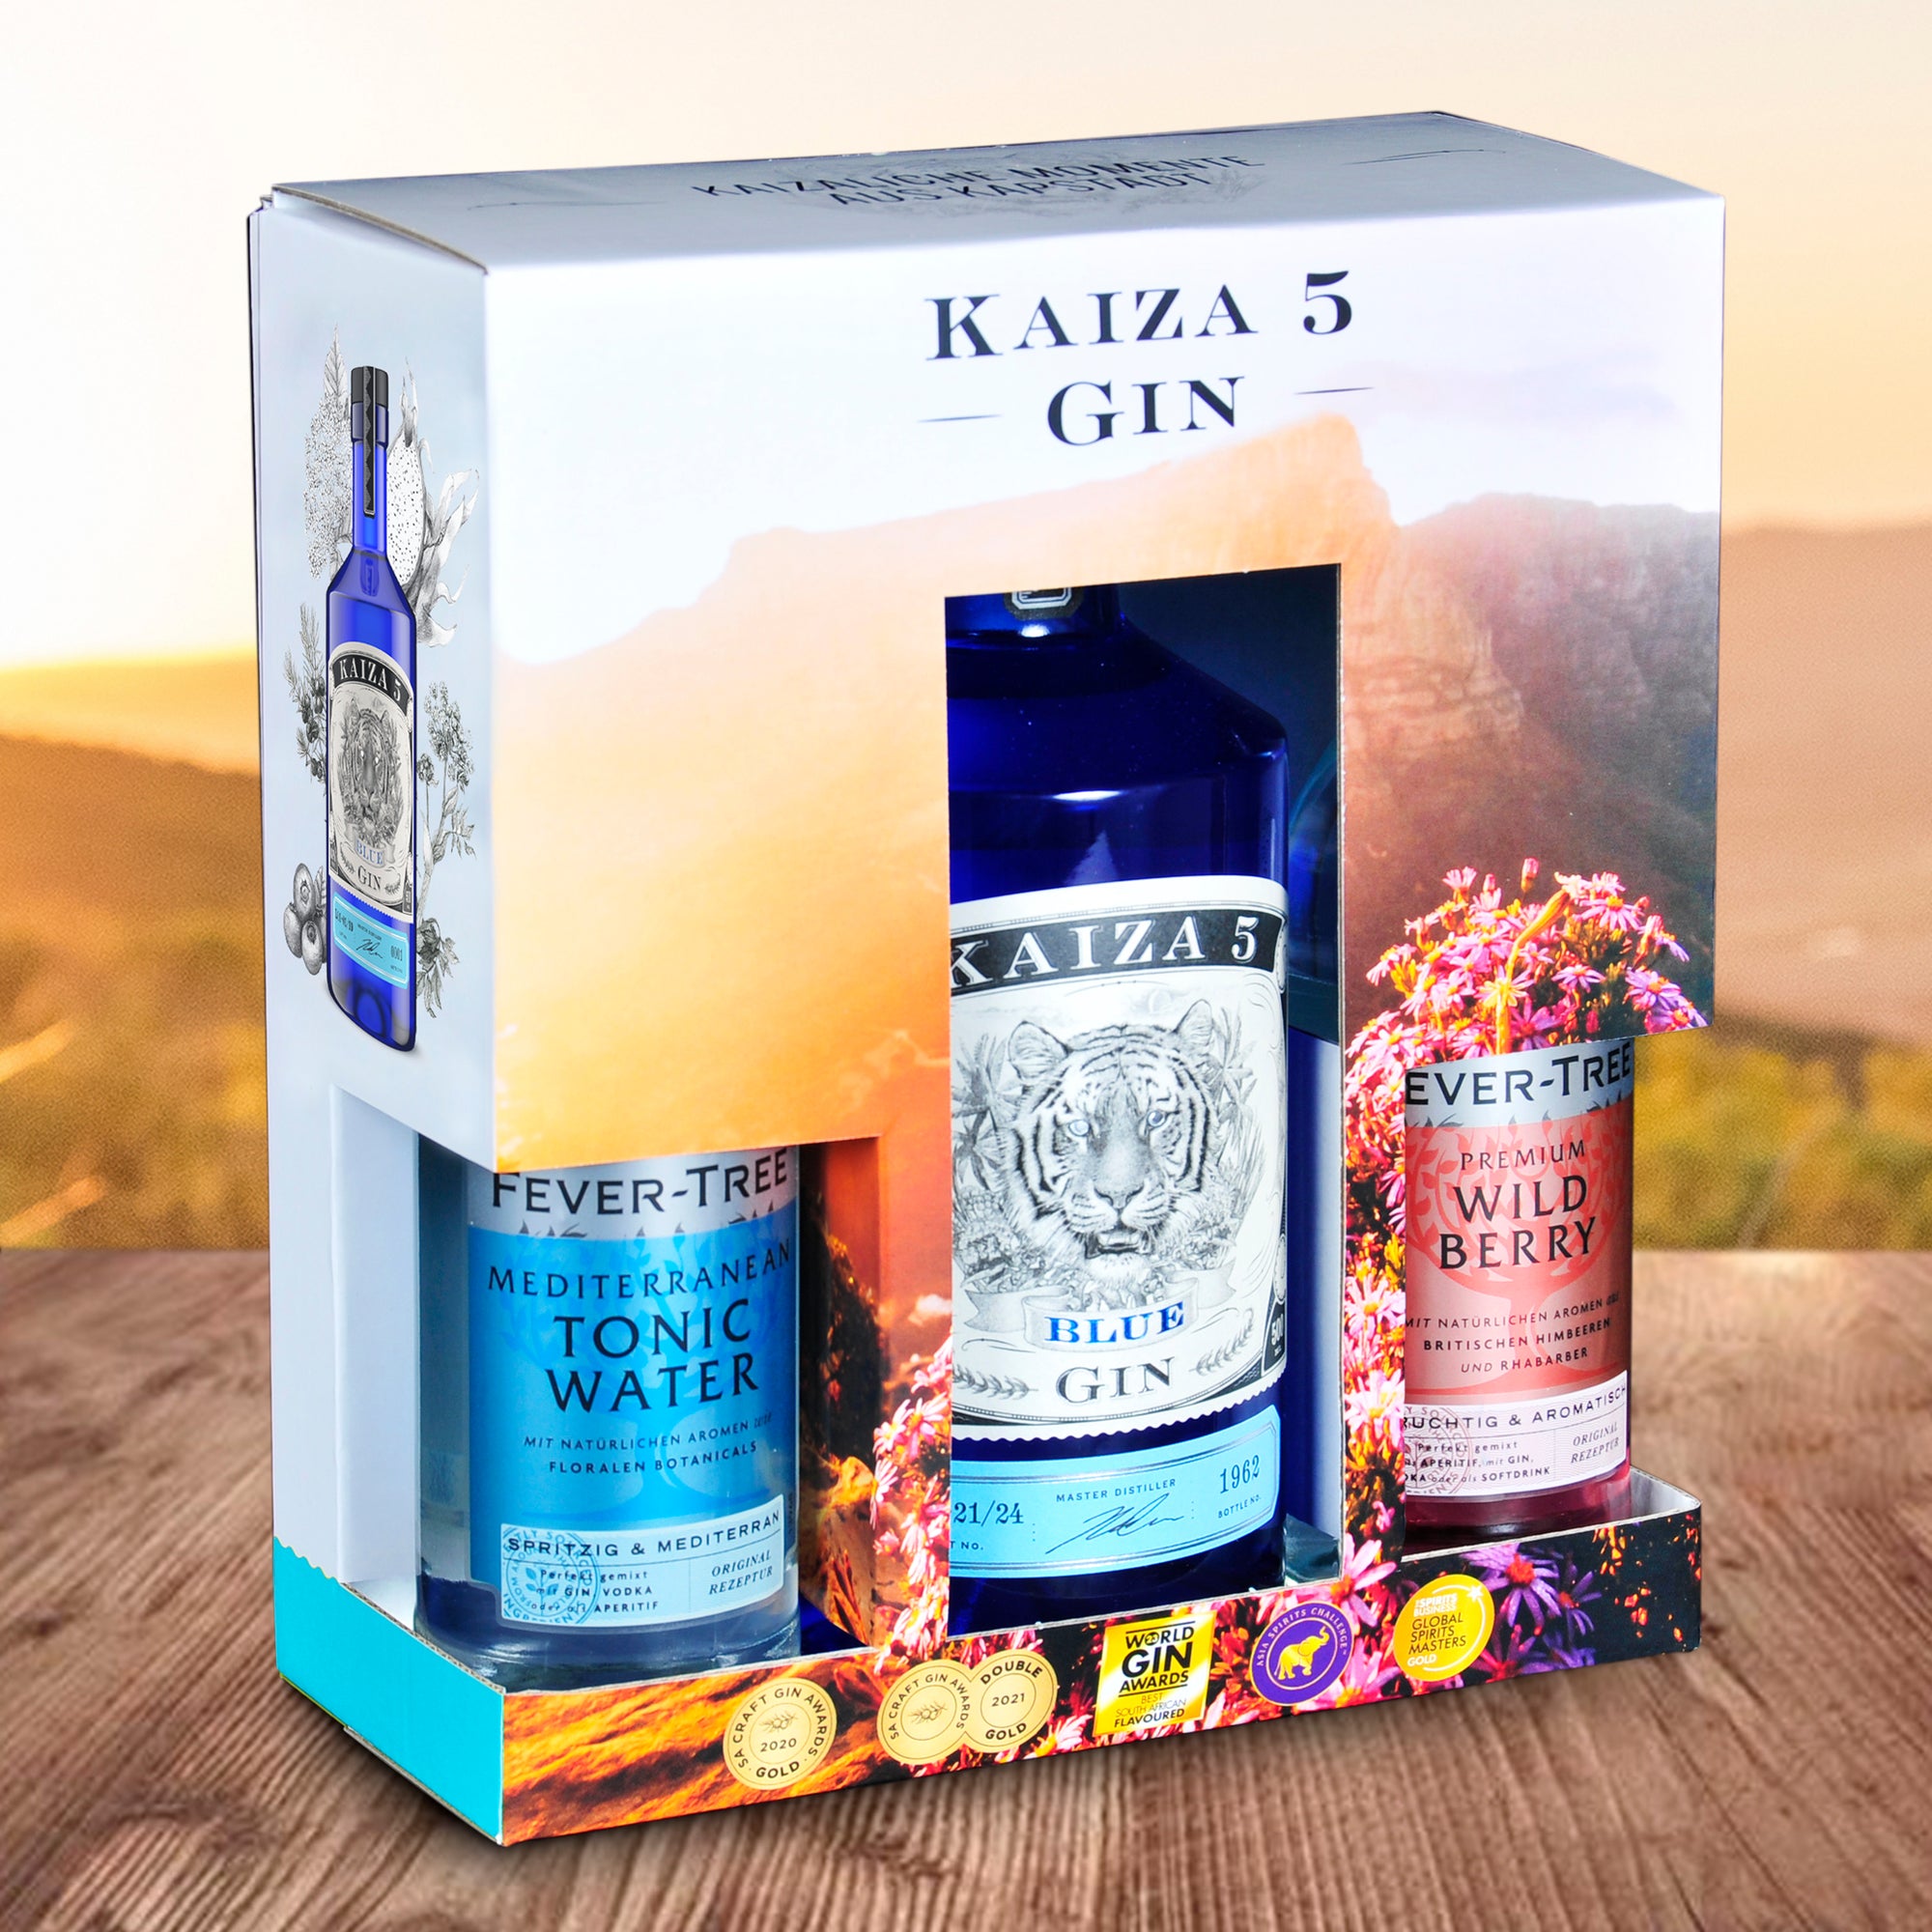 KAIZA 5 BLUE GIN Box mit 2x Fever-Tree Tonic Water Mix